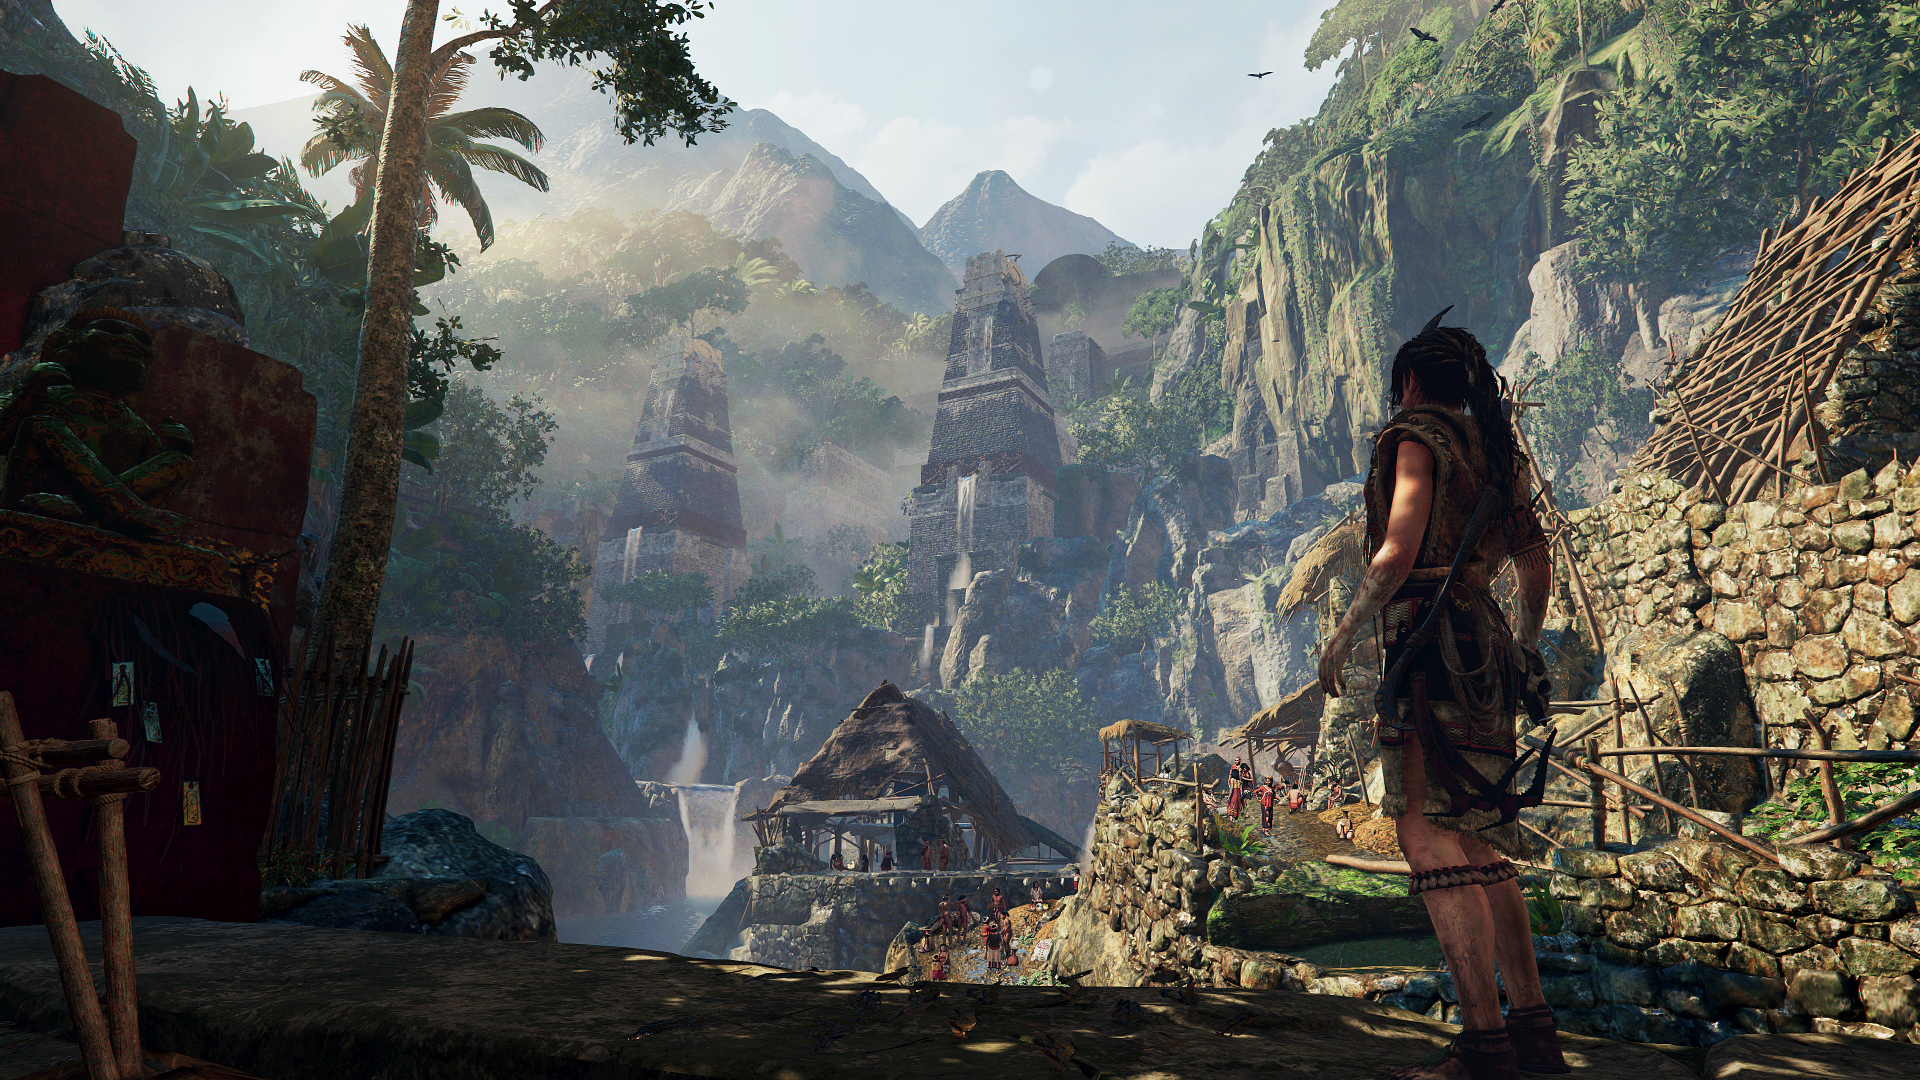 Lara Croft S Great Hunt Begins In A Batch Of New Shadow Of